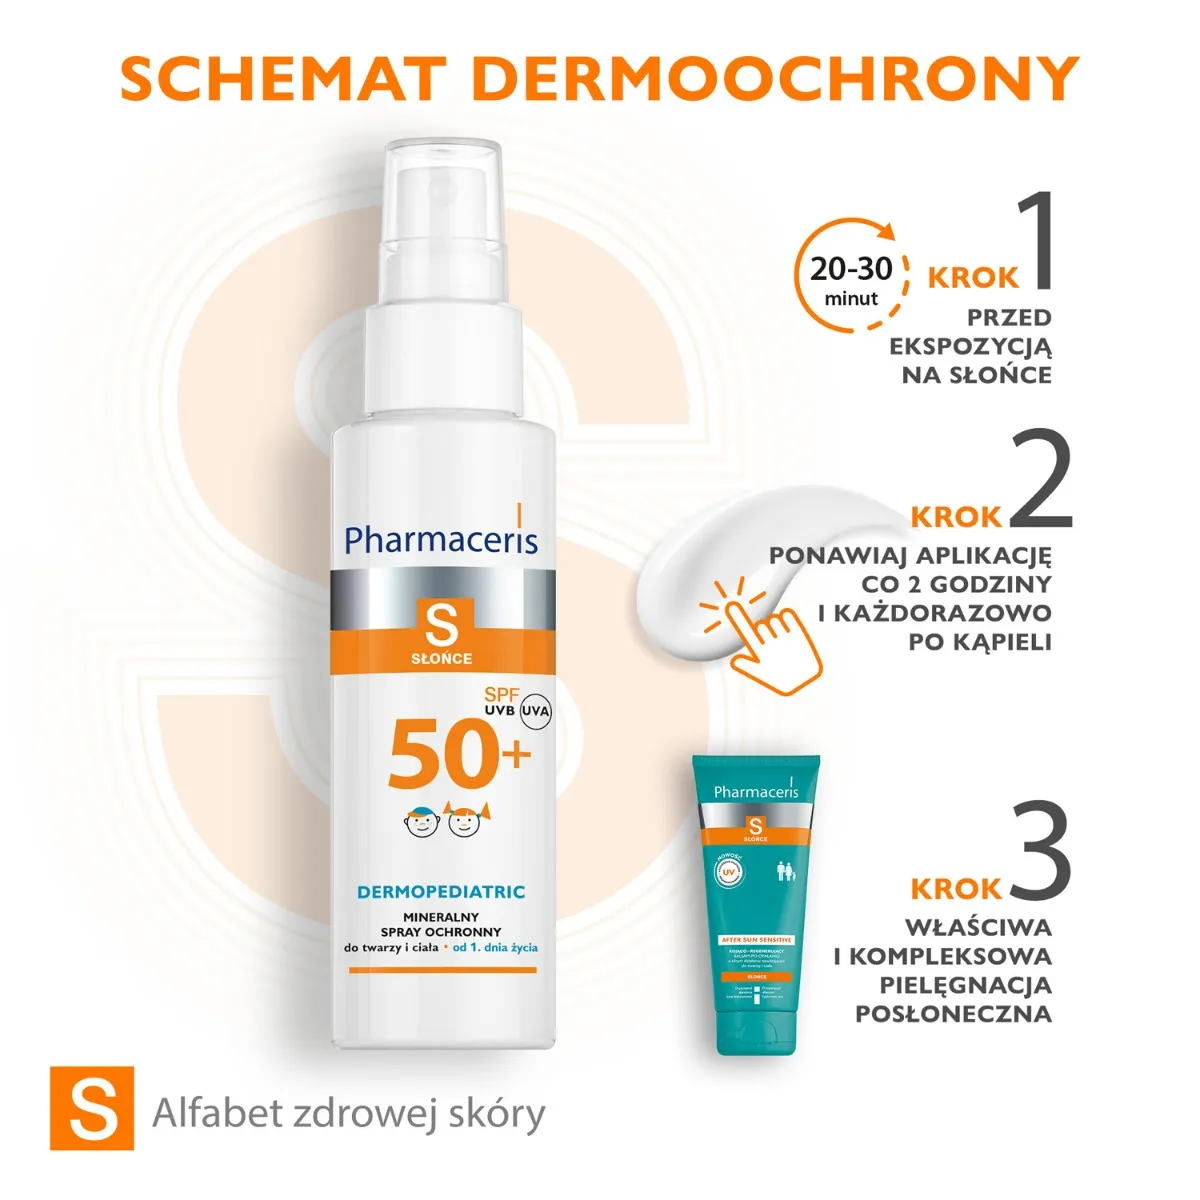 Pharmaceris S Dermopediatric Mineralny spray ochronny do twarzy i ciała SPF 50+ ,100 ml 